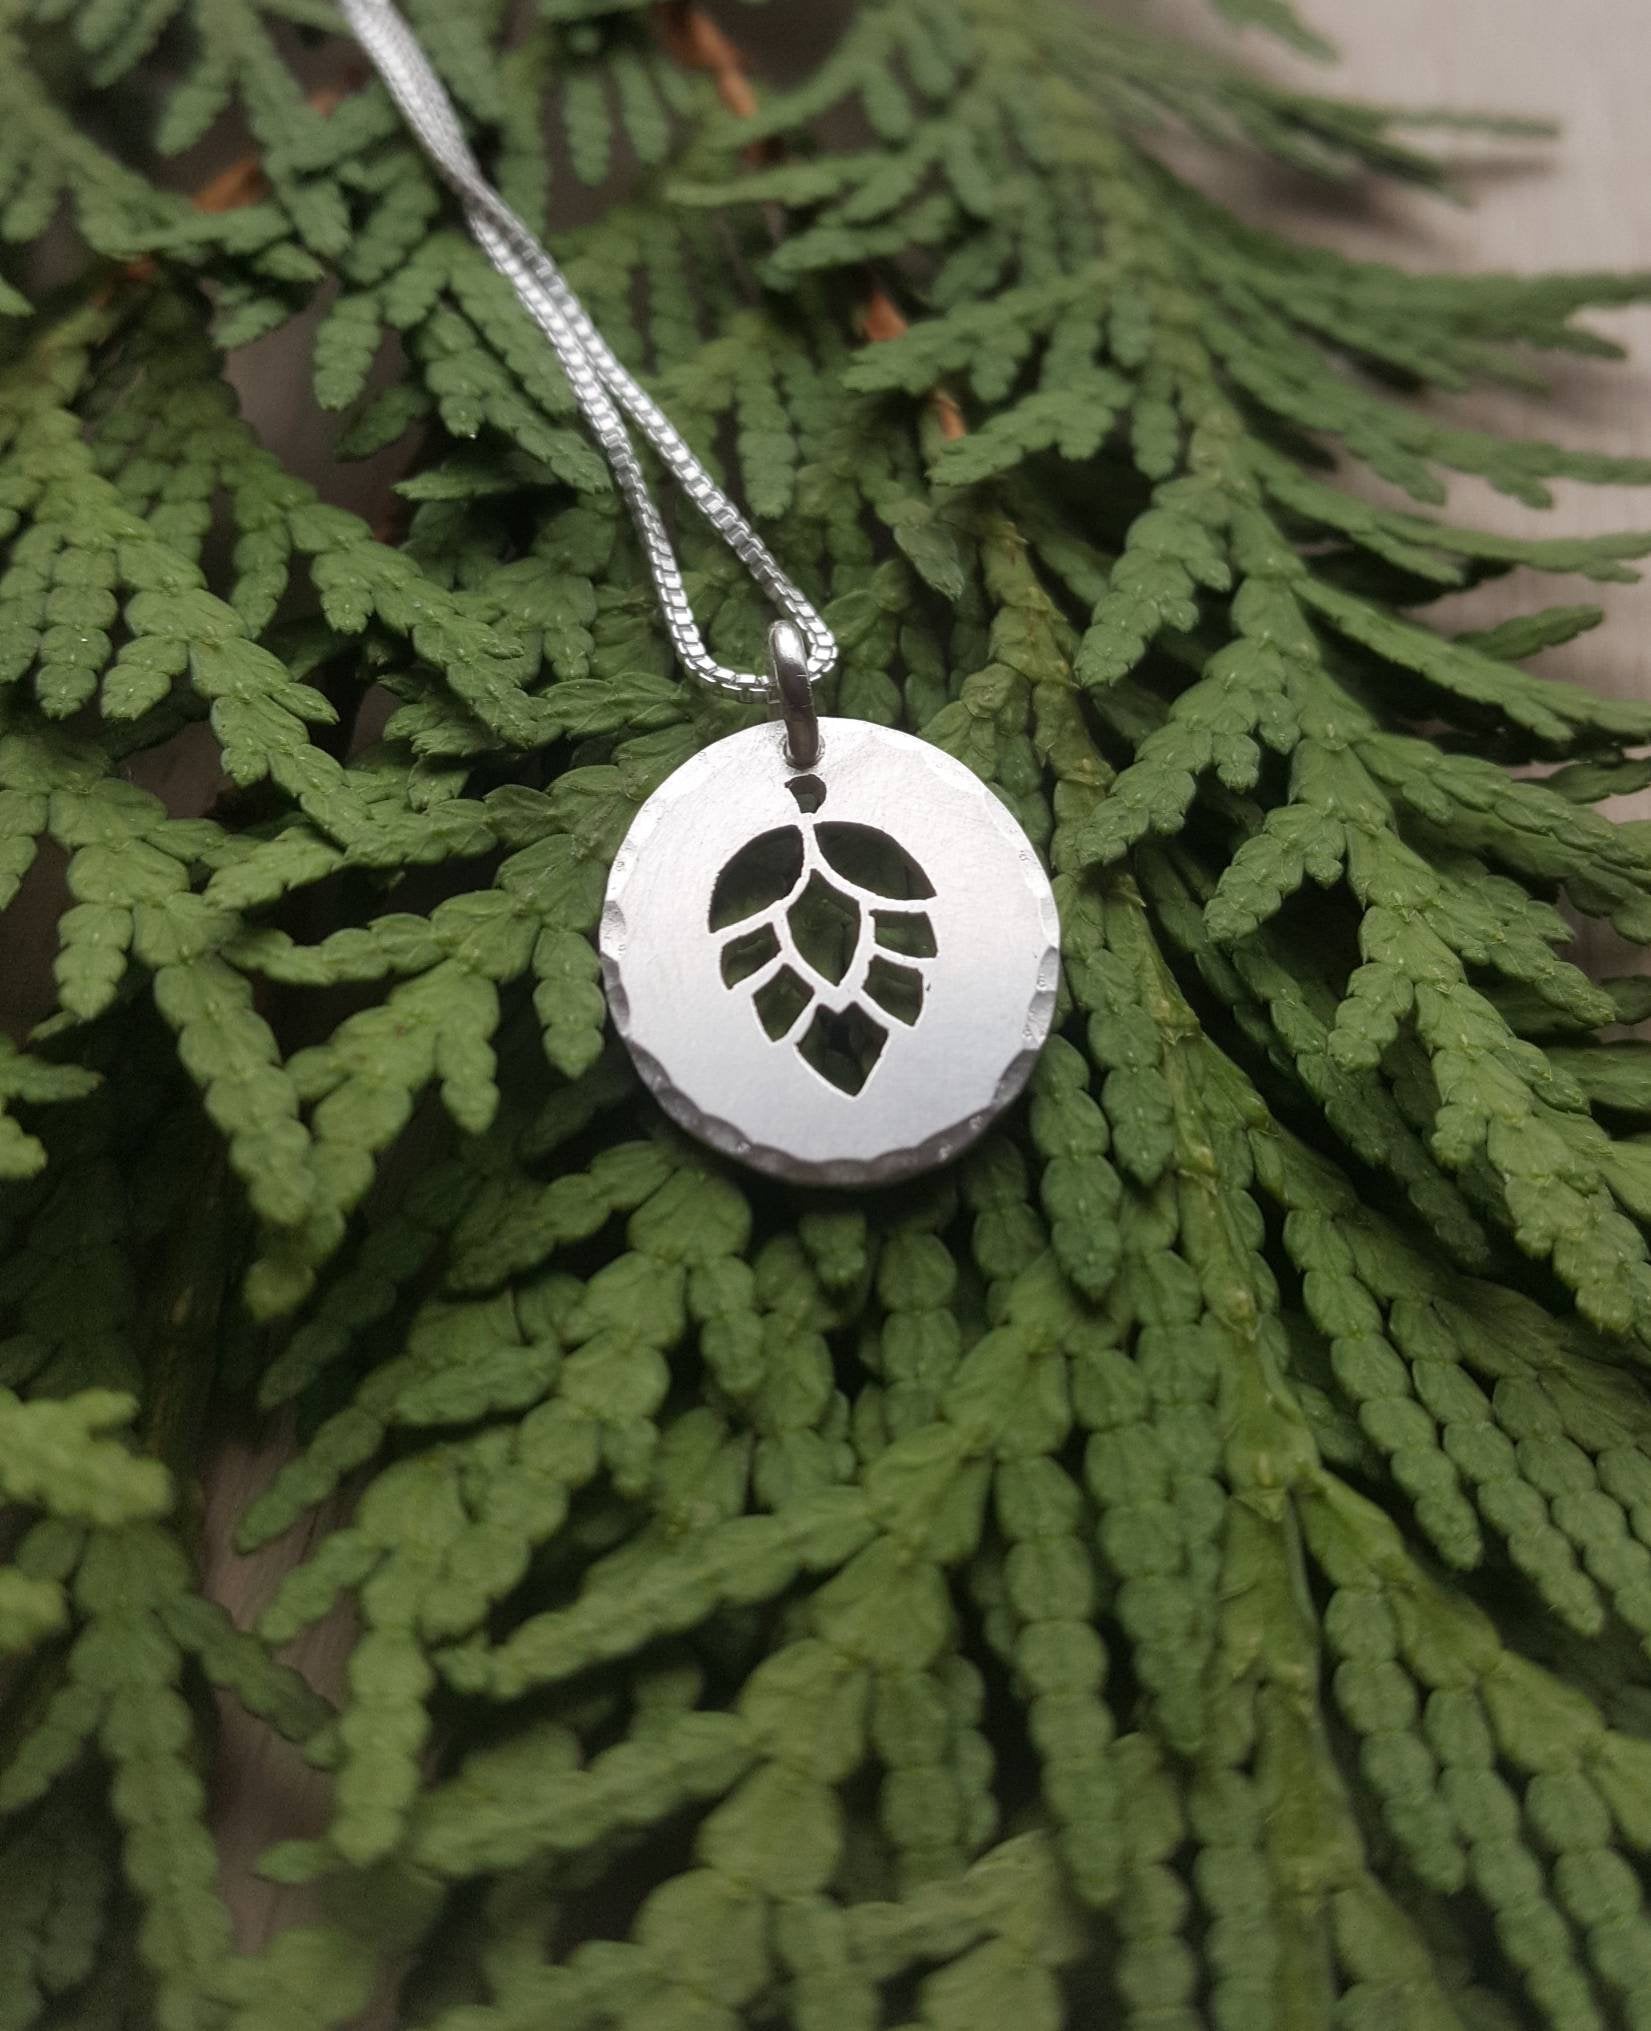 Silver Hop Pendant - Craft beer necklace